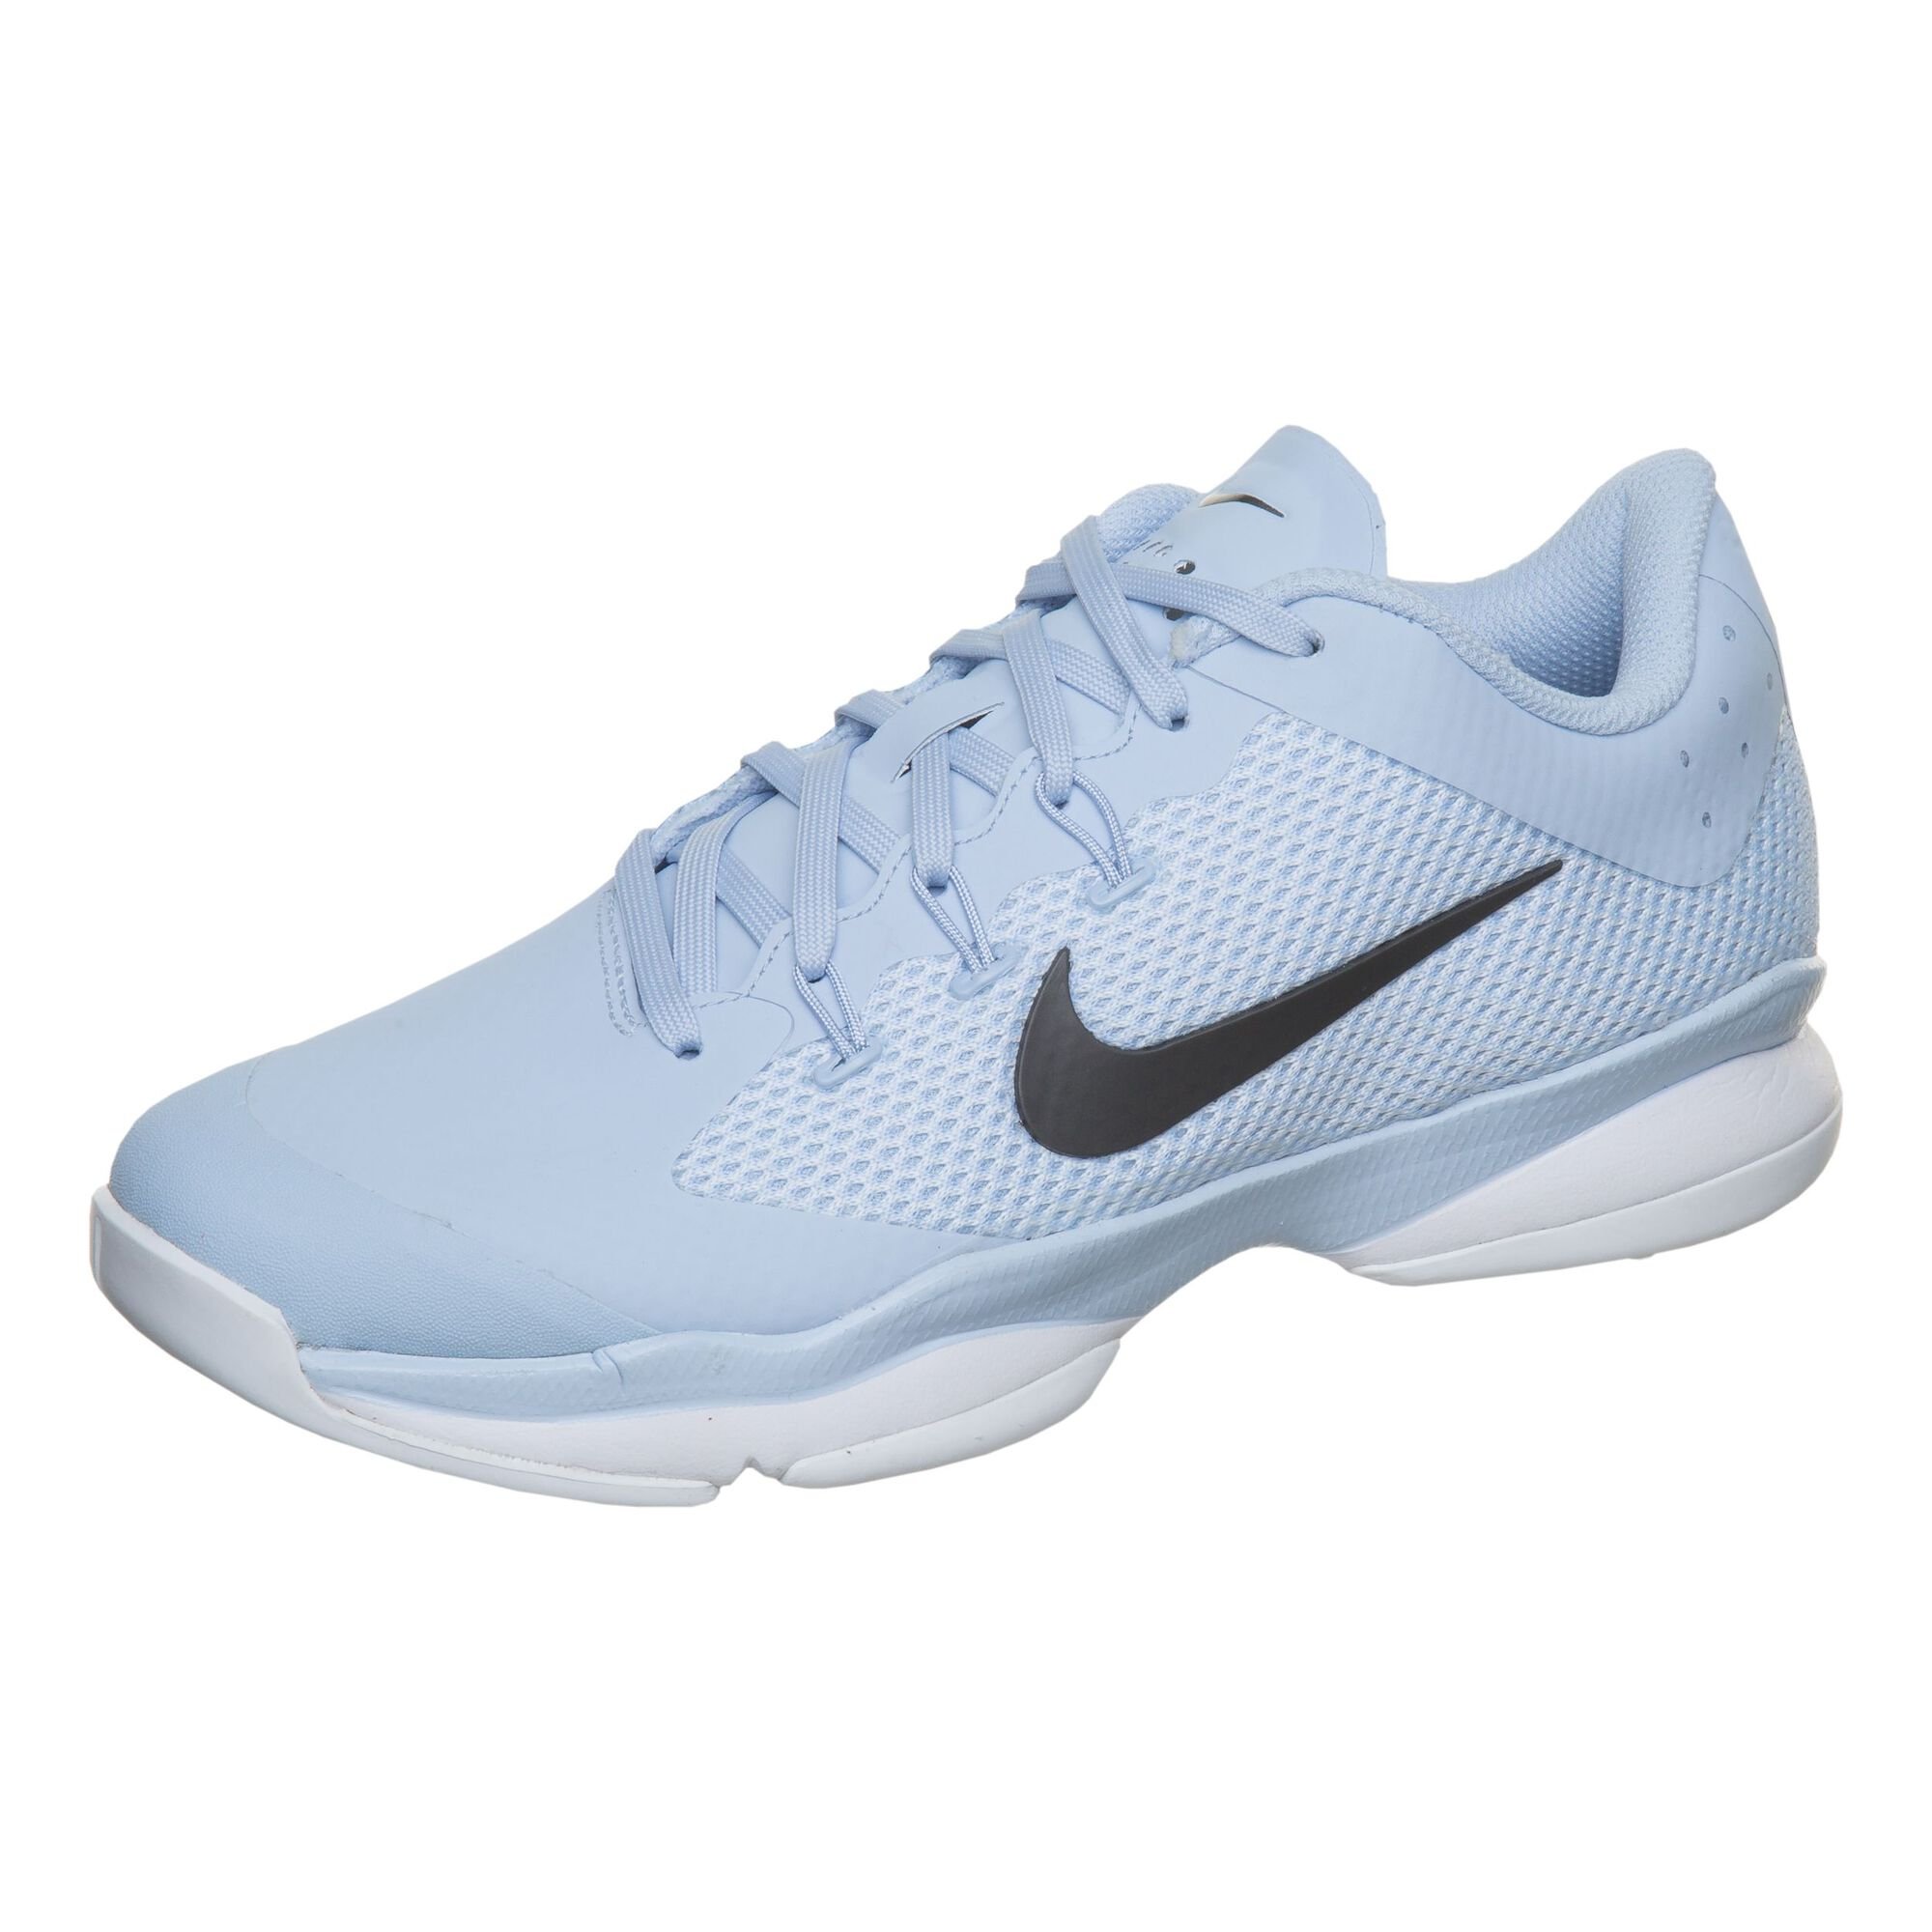 Acquiesce Naleving van trui buy Nike Air Zoom Ultra Carpet Shoe Women - Light Blue, Dark Grey online |  Tennis-Point